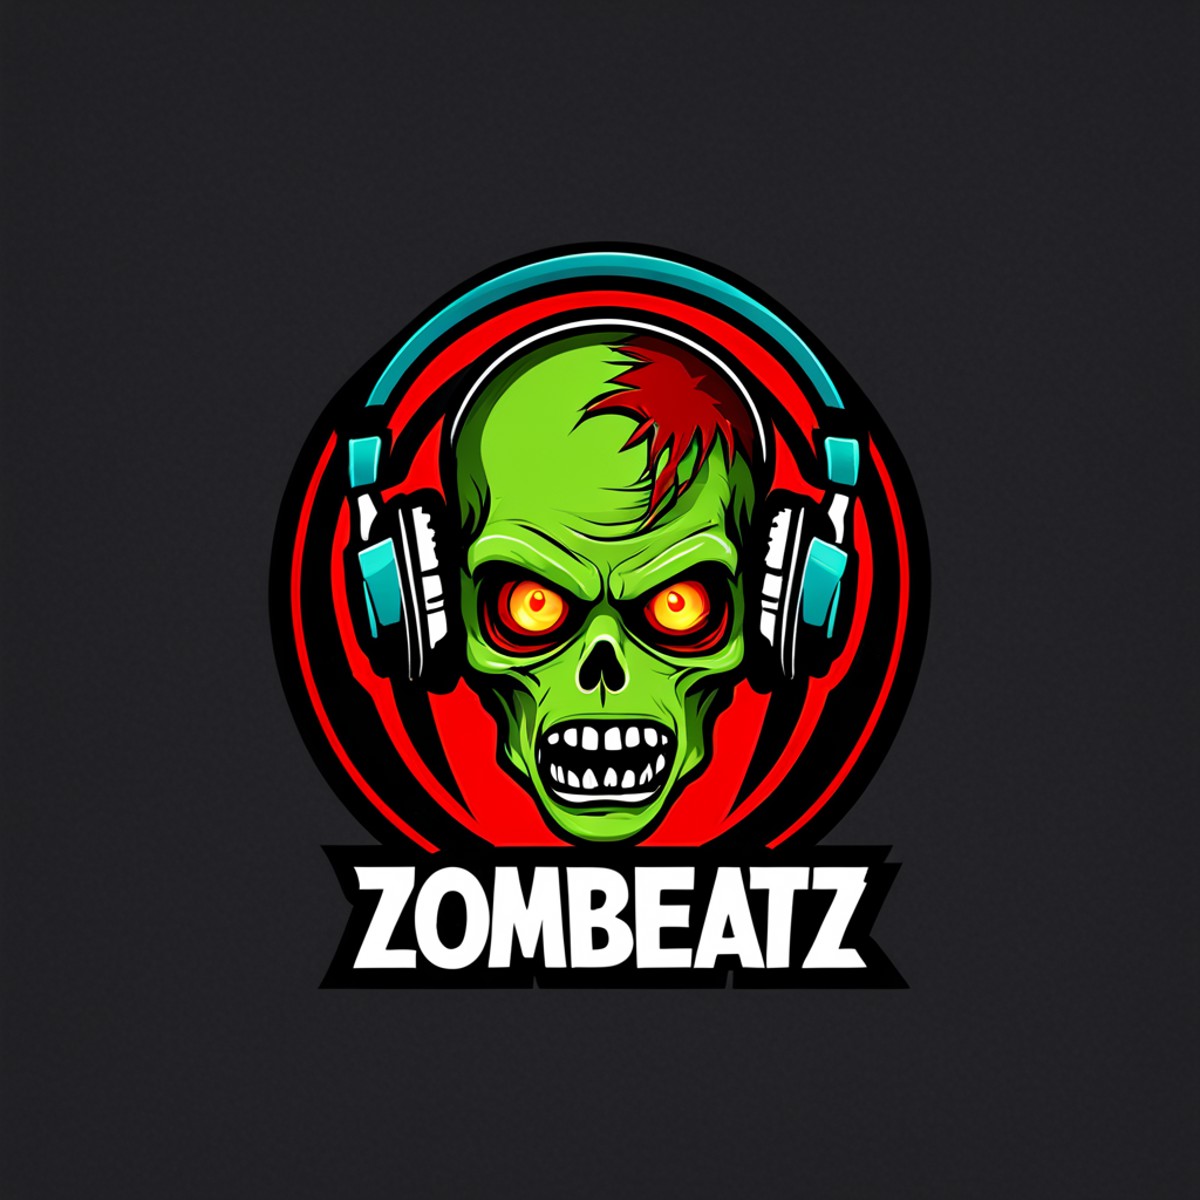 logomkrdsxl,an  edgy logo  of a zombie with headphones ,  vector, text "ZomBeatz",  <lora:logomkrdsxl:1>, best quality, ma...